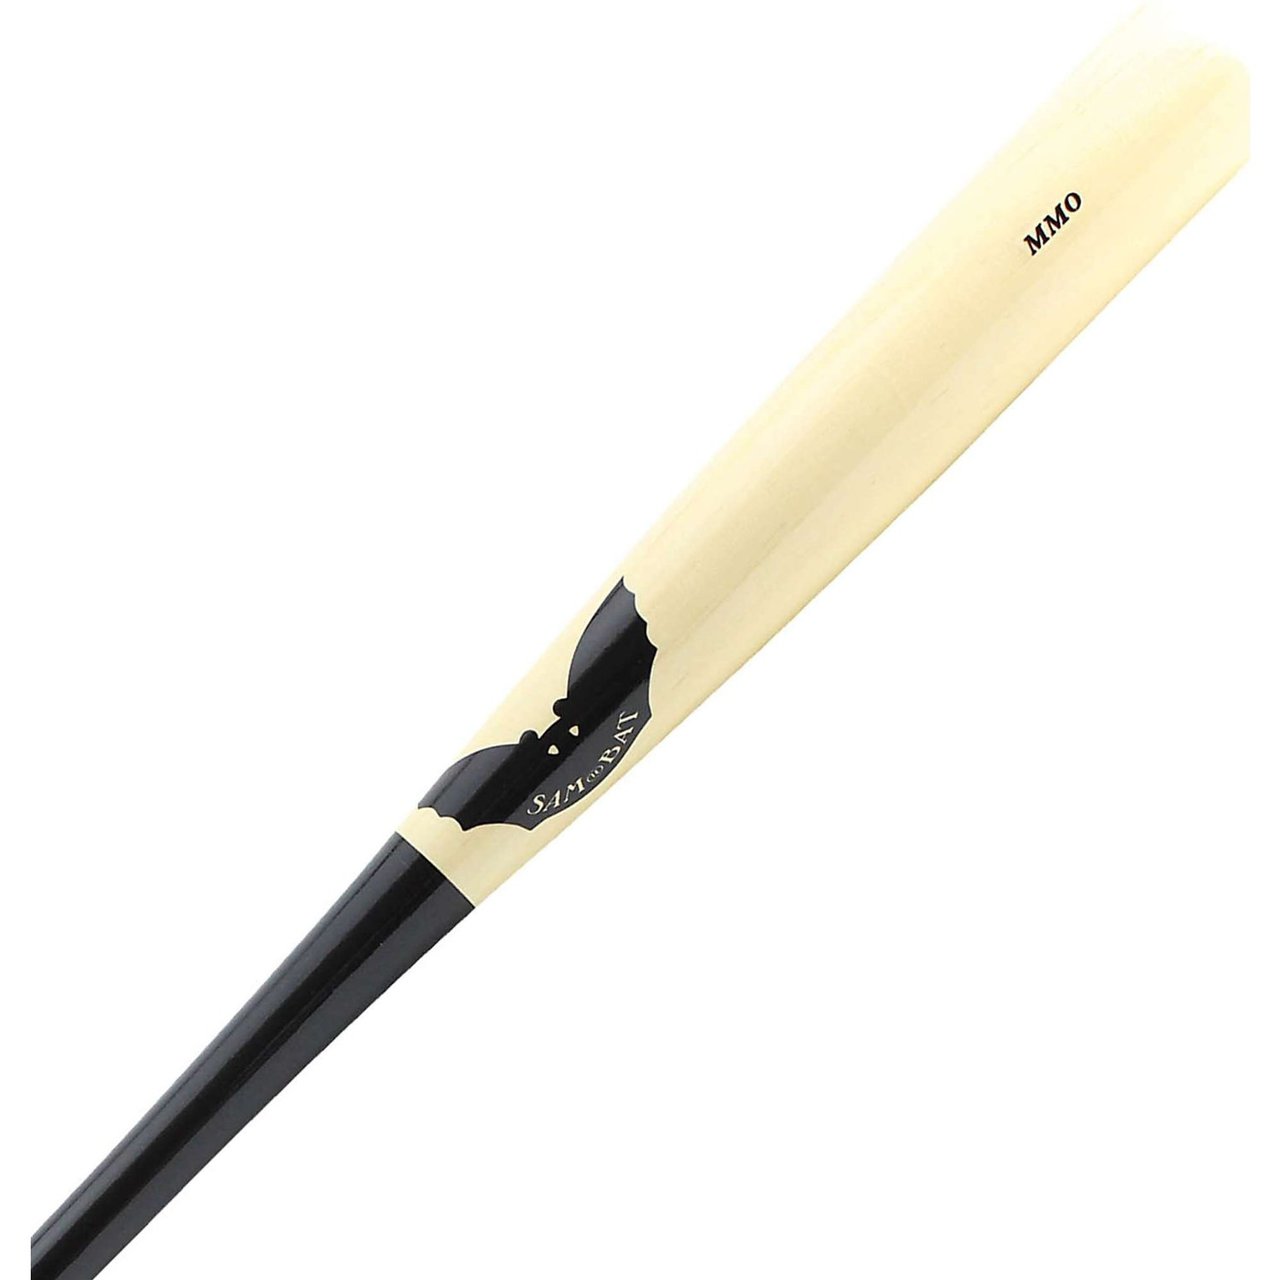 sam-bat-mmo-maple-wood-baseball-bat-34-inch MMO-34-inch  883496002549 Handle Size 15 16 Barrel Size Approximately 2.5 Profile Crossover M